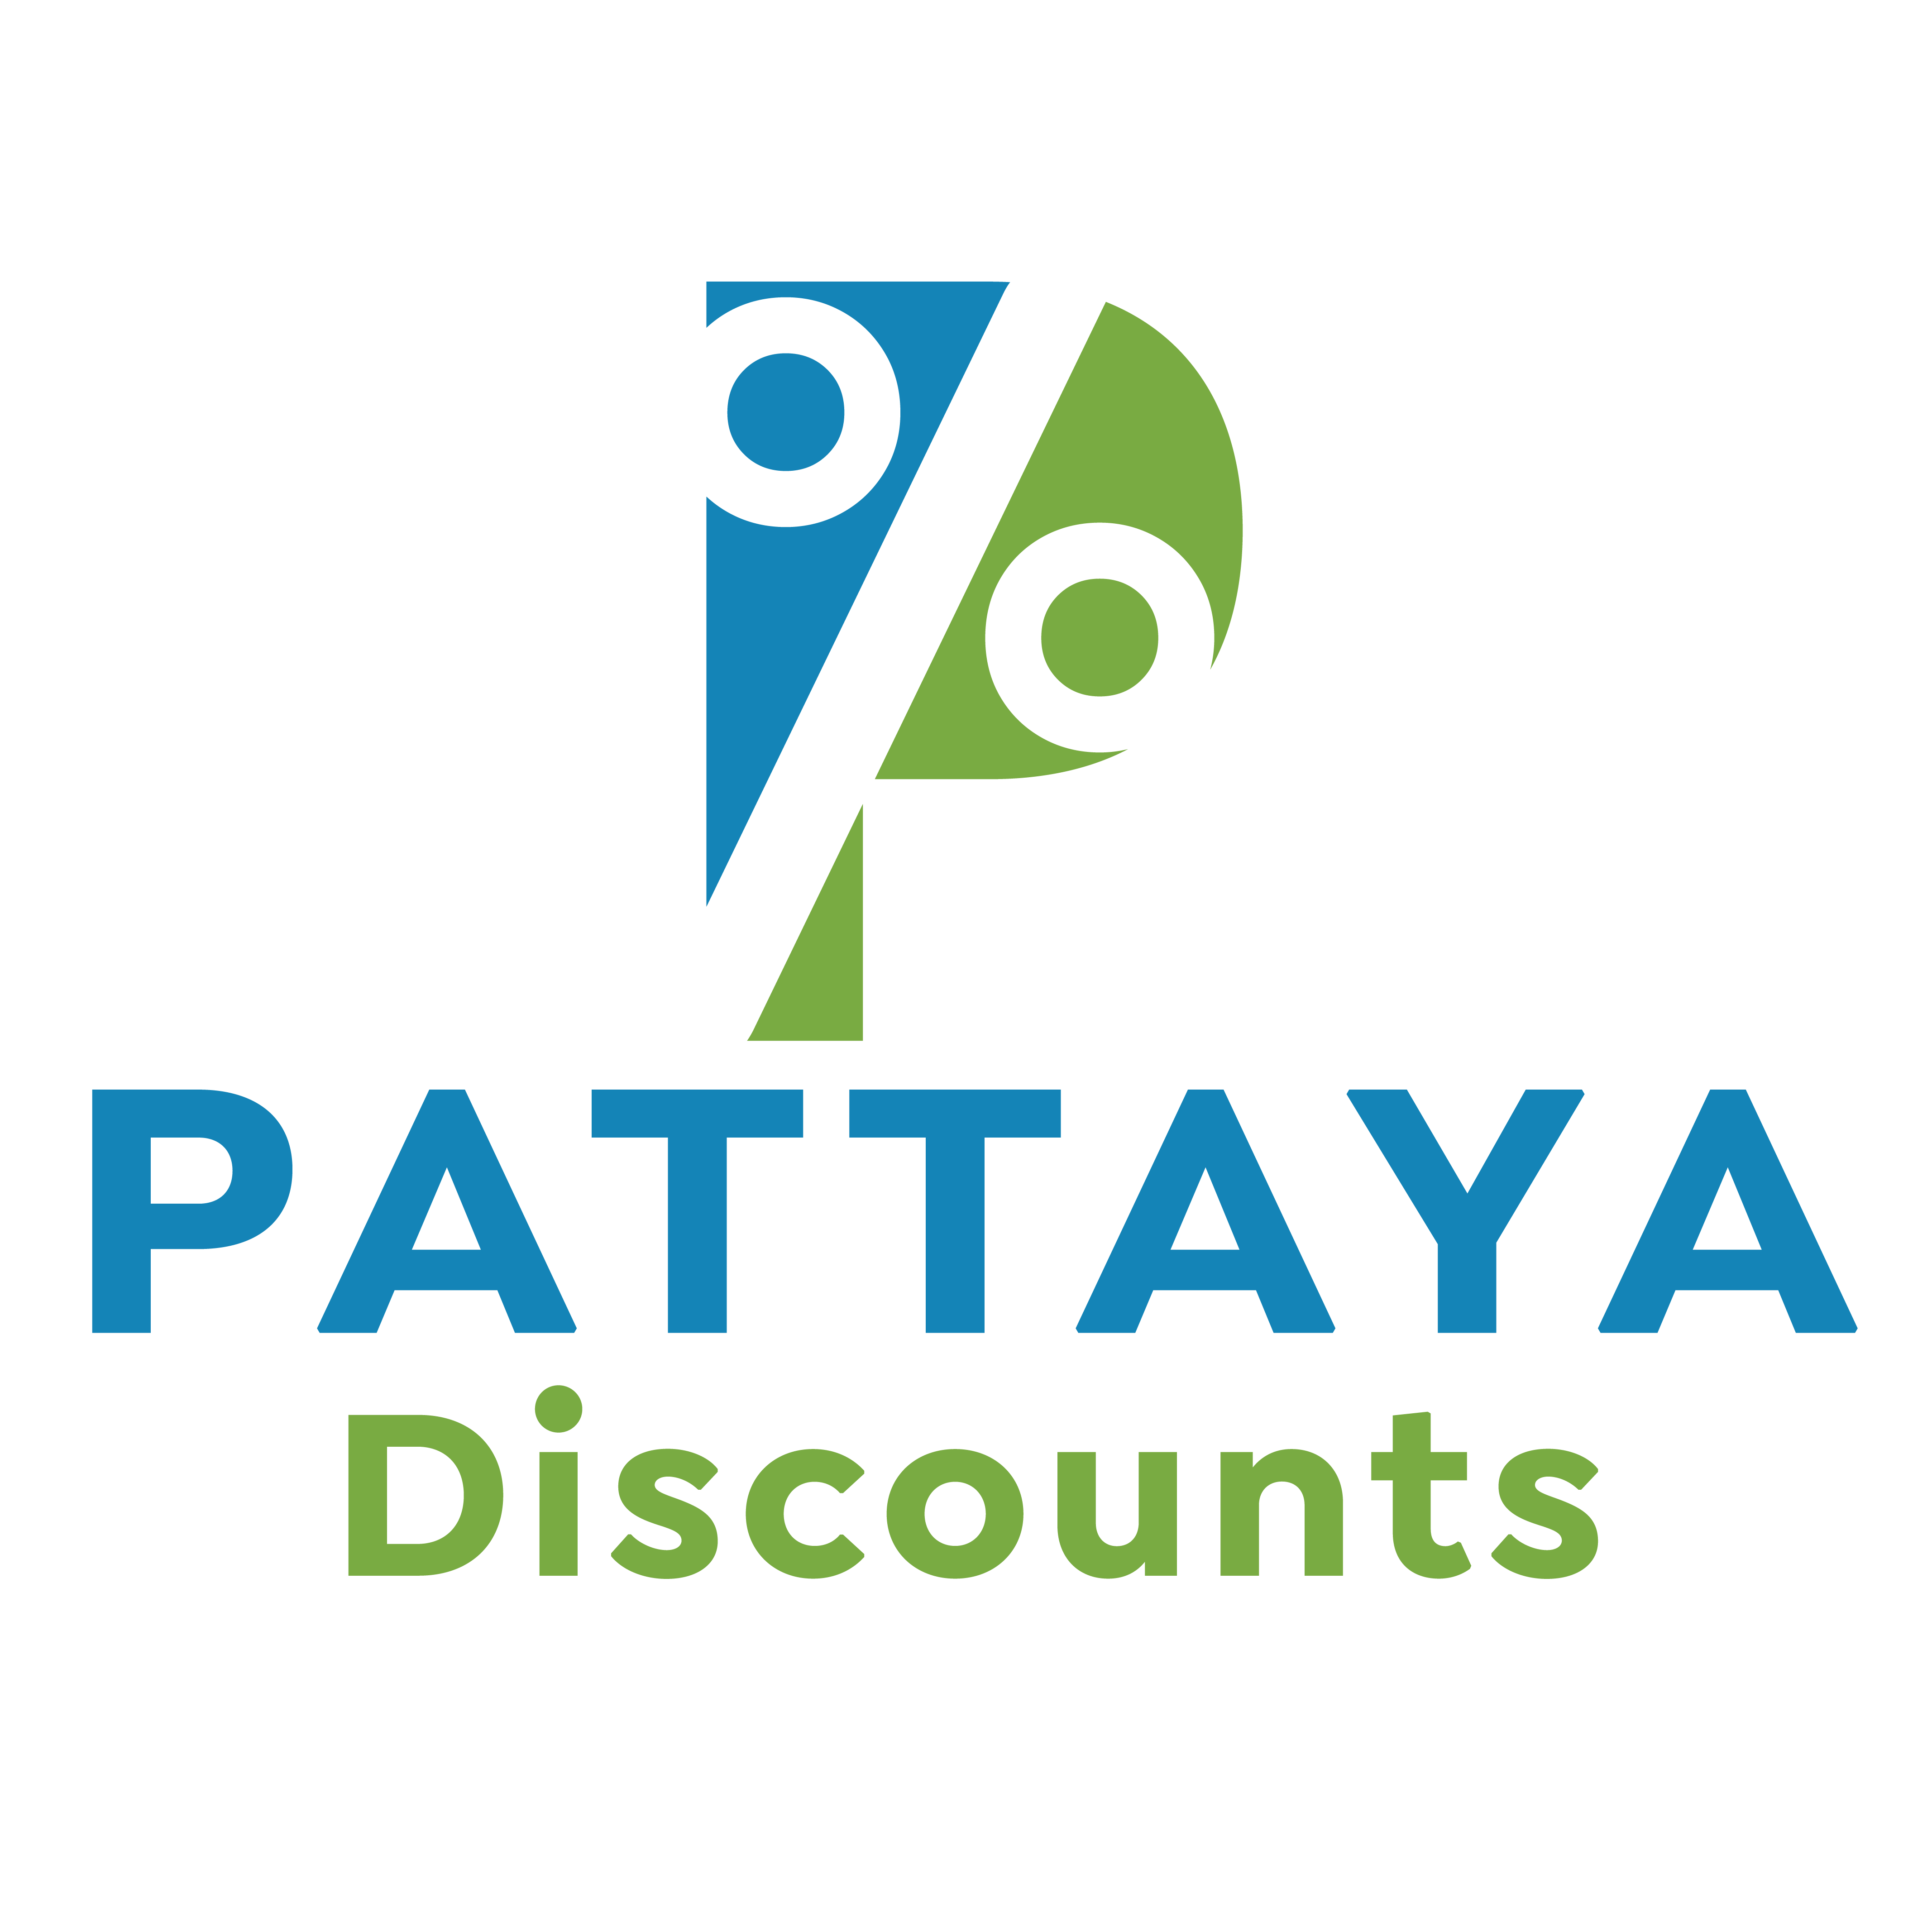 Pattaya Discounts